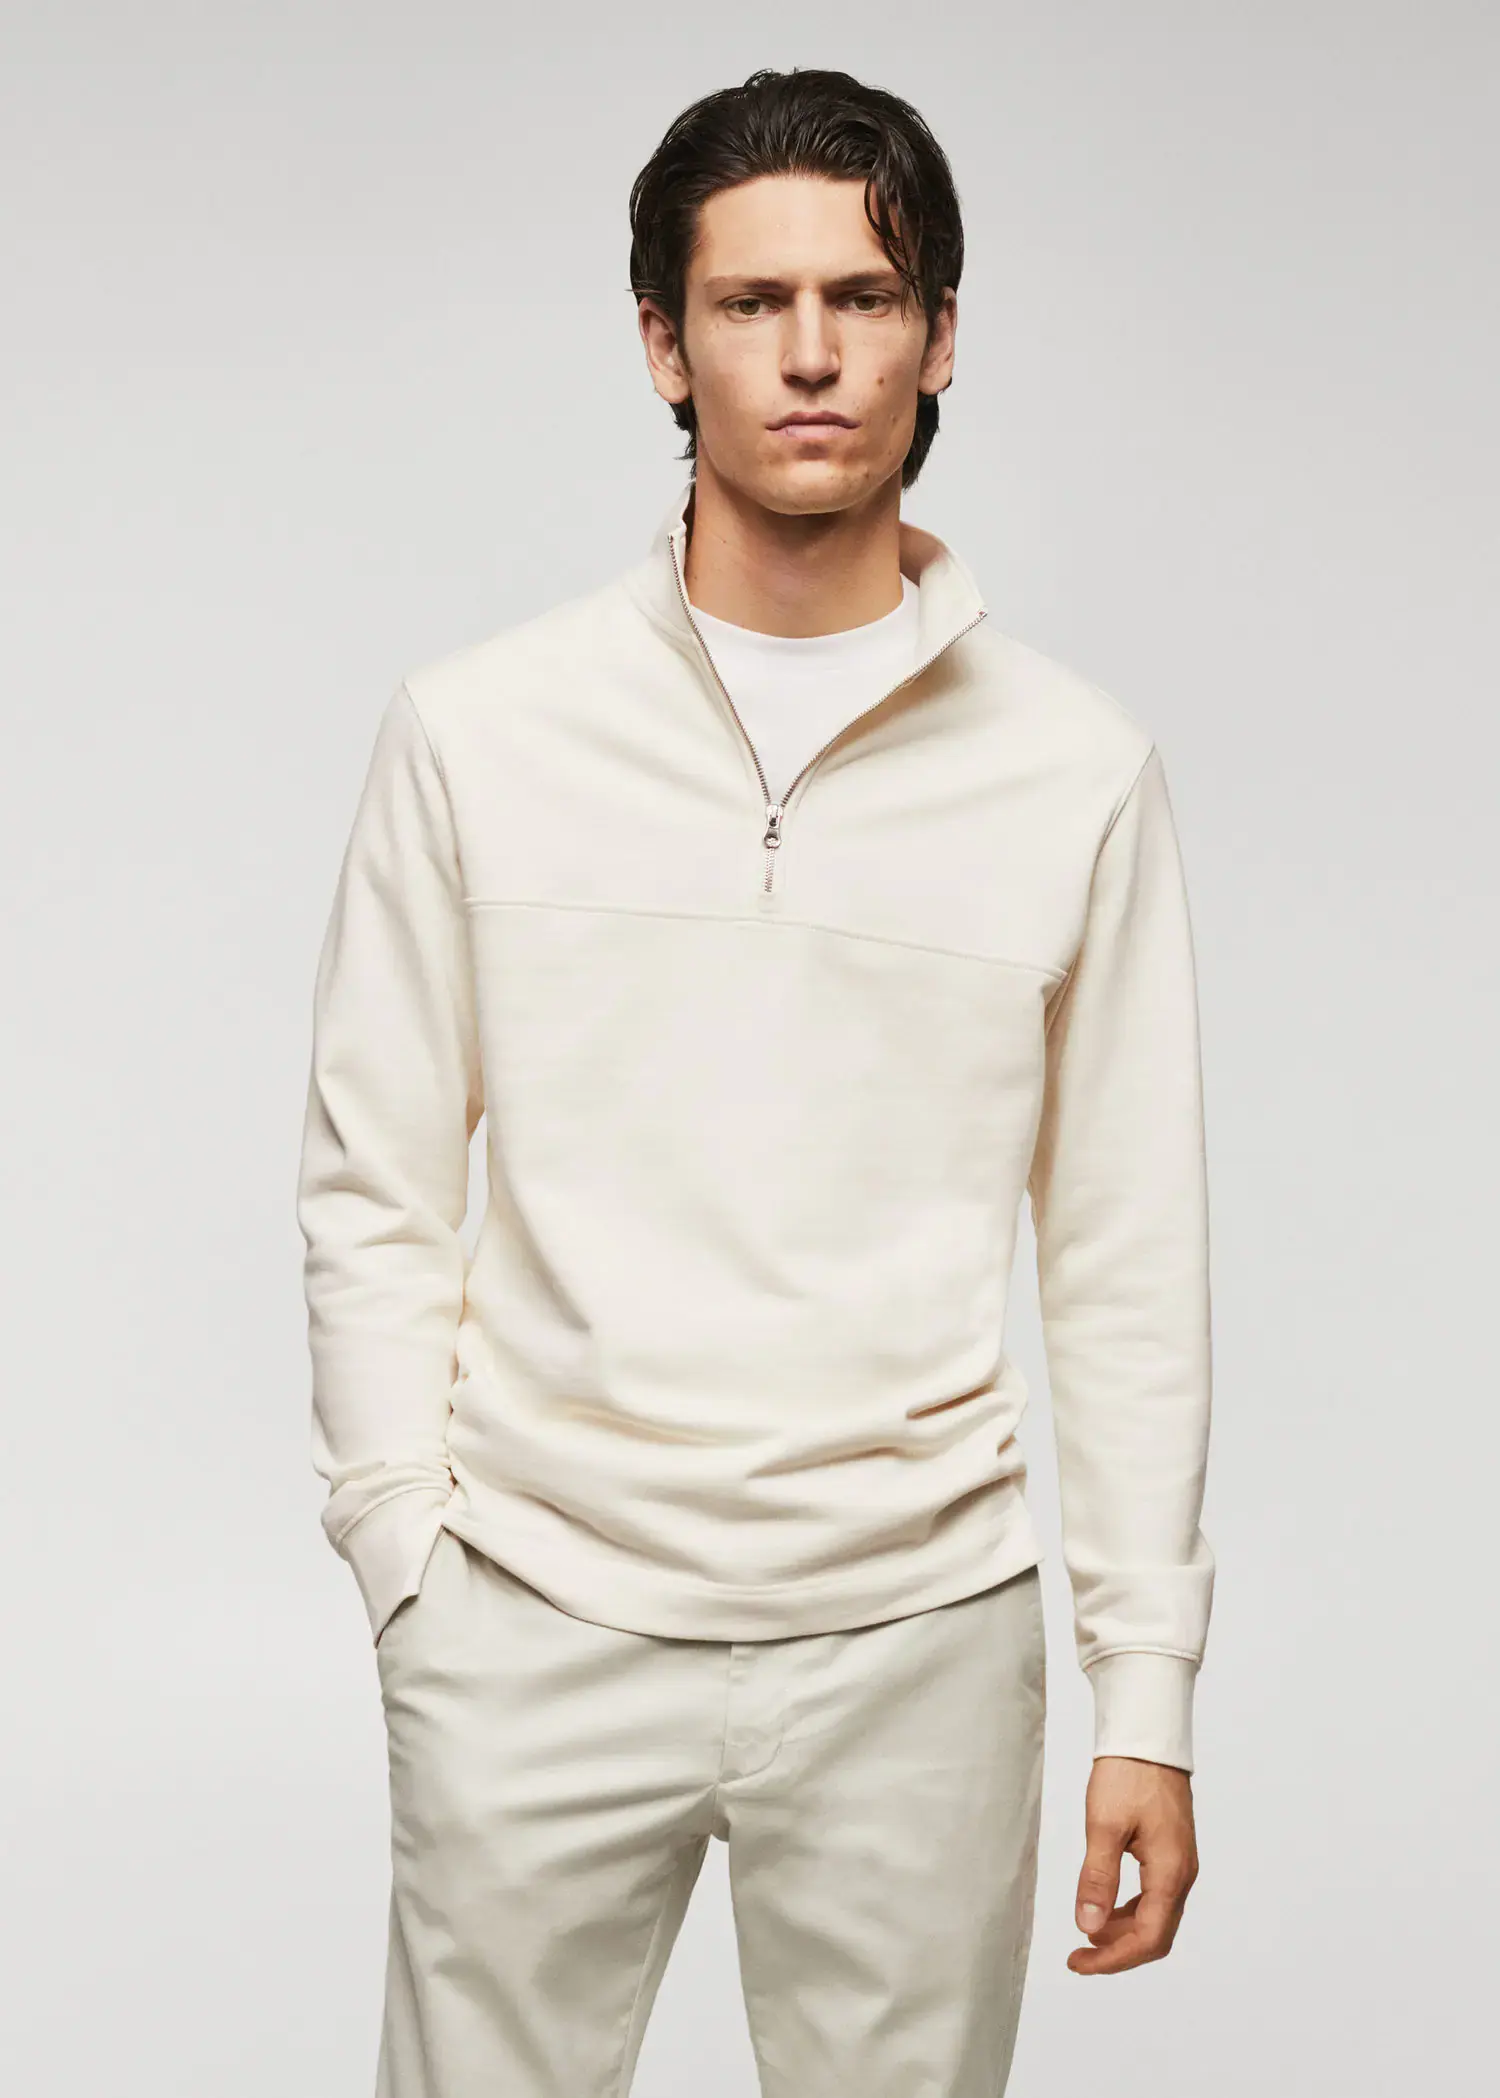 Mango Cotton sweatshirt with zip neck. a man wearing a white shirt and a white jacket. 